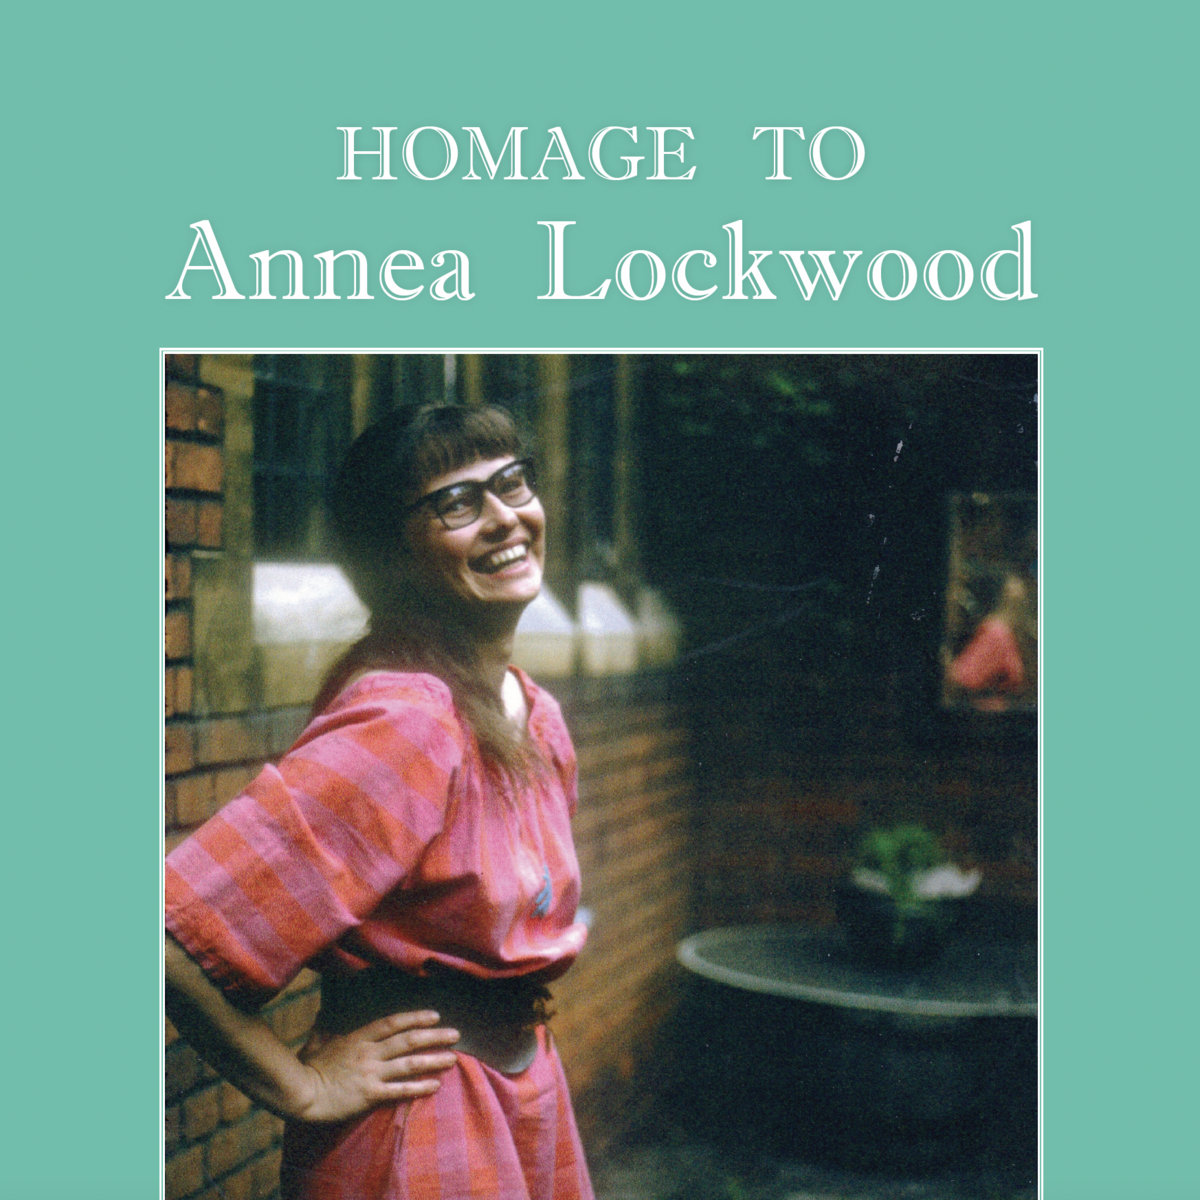 Homage to Annea Lockwood